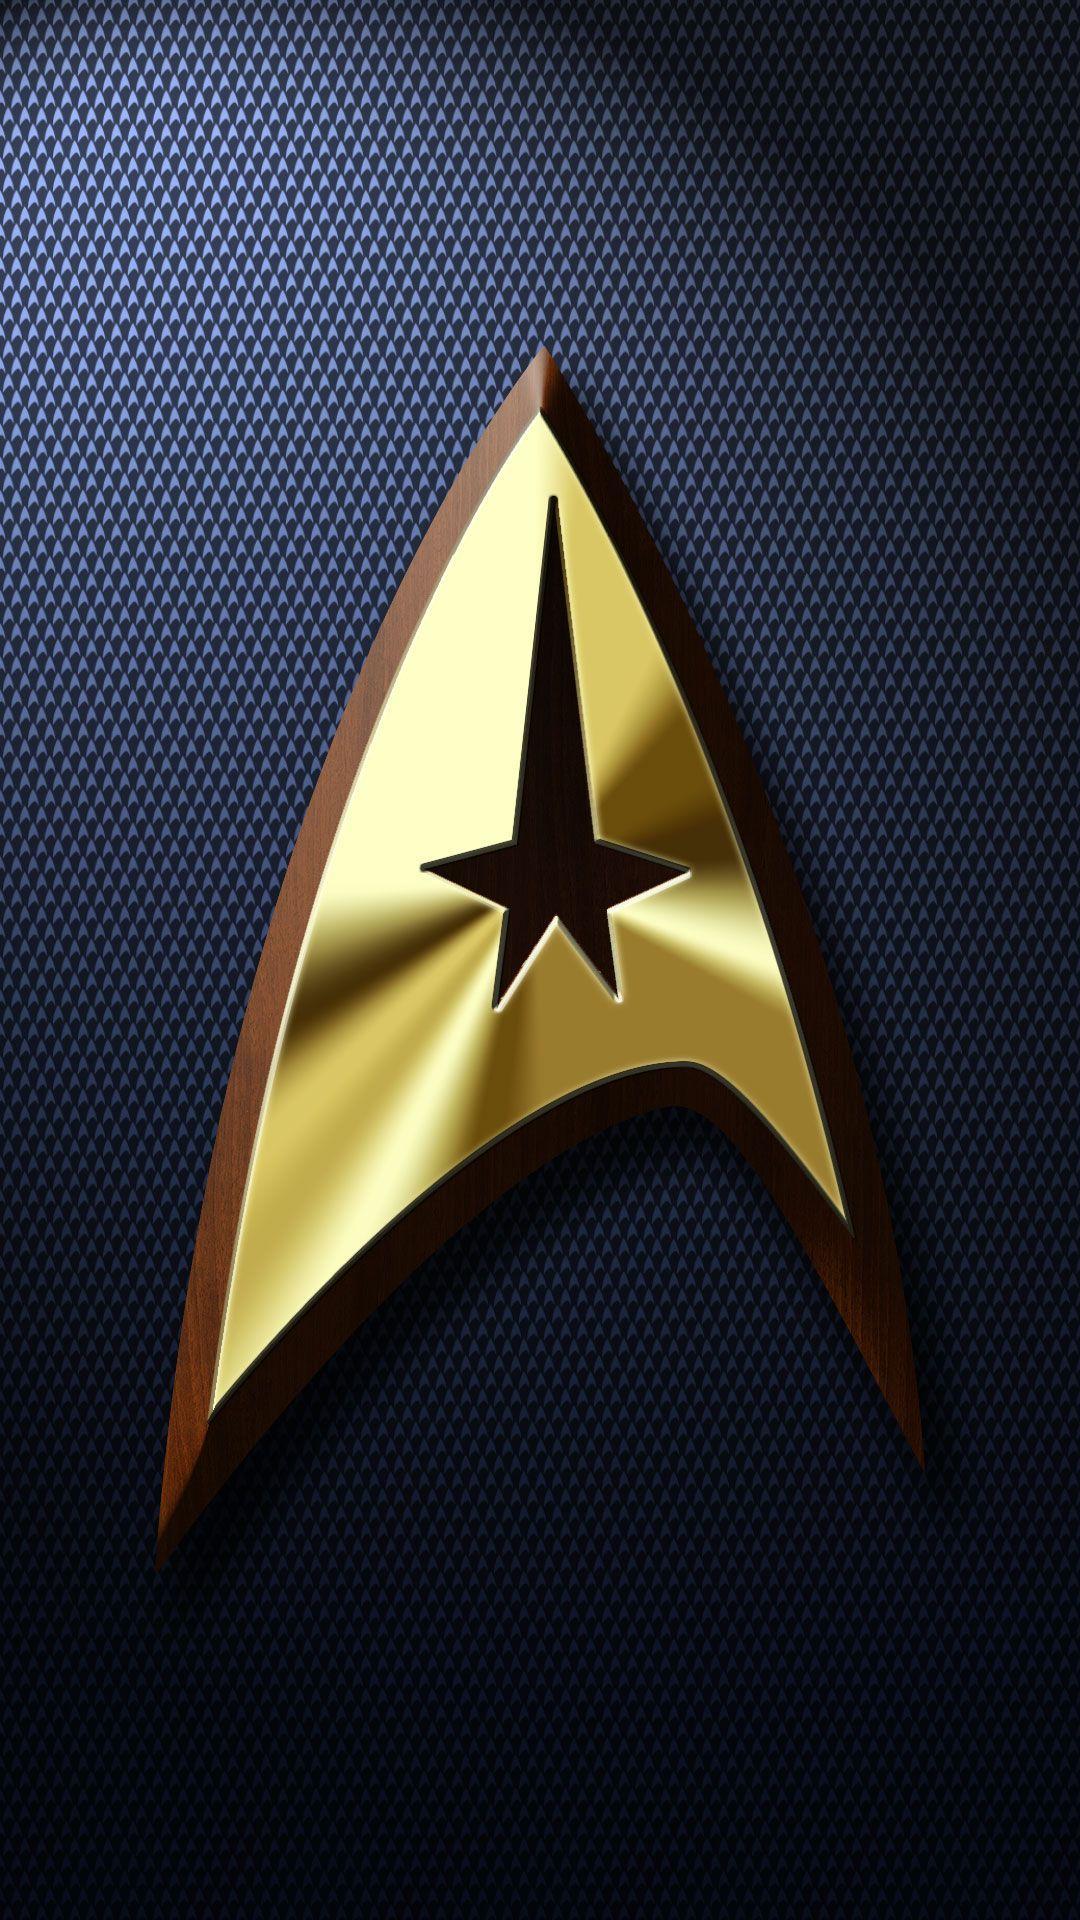 Download Star Trek Communicator Wallpaper, HD Backgrounds